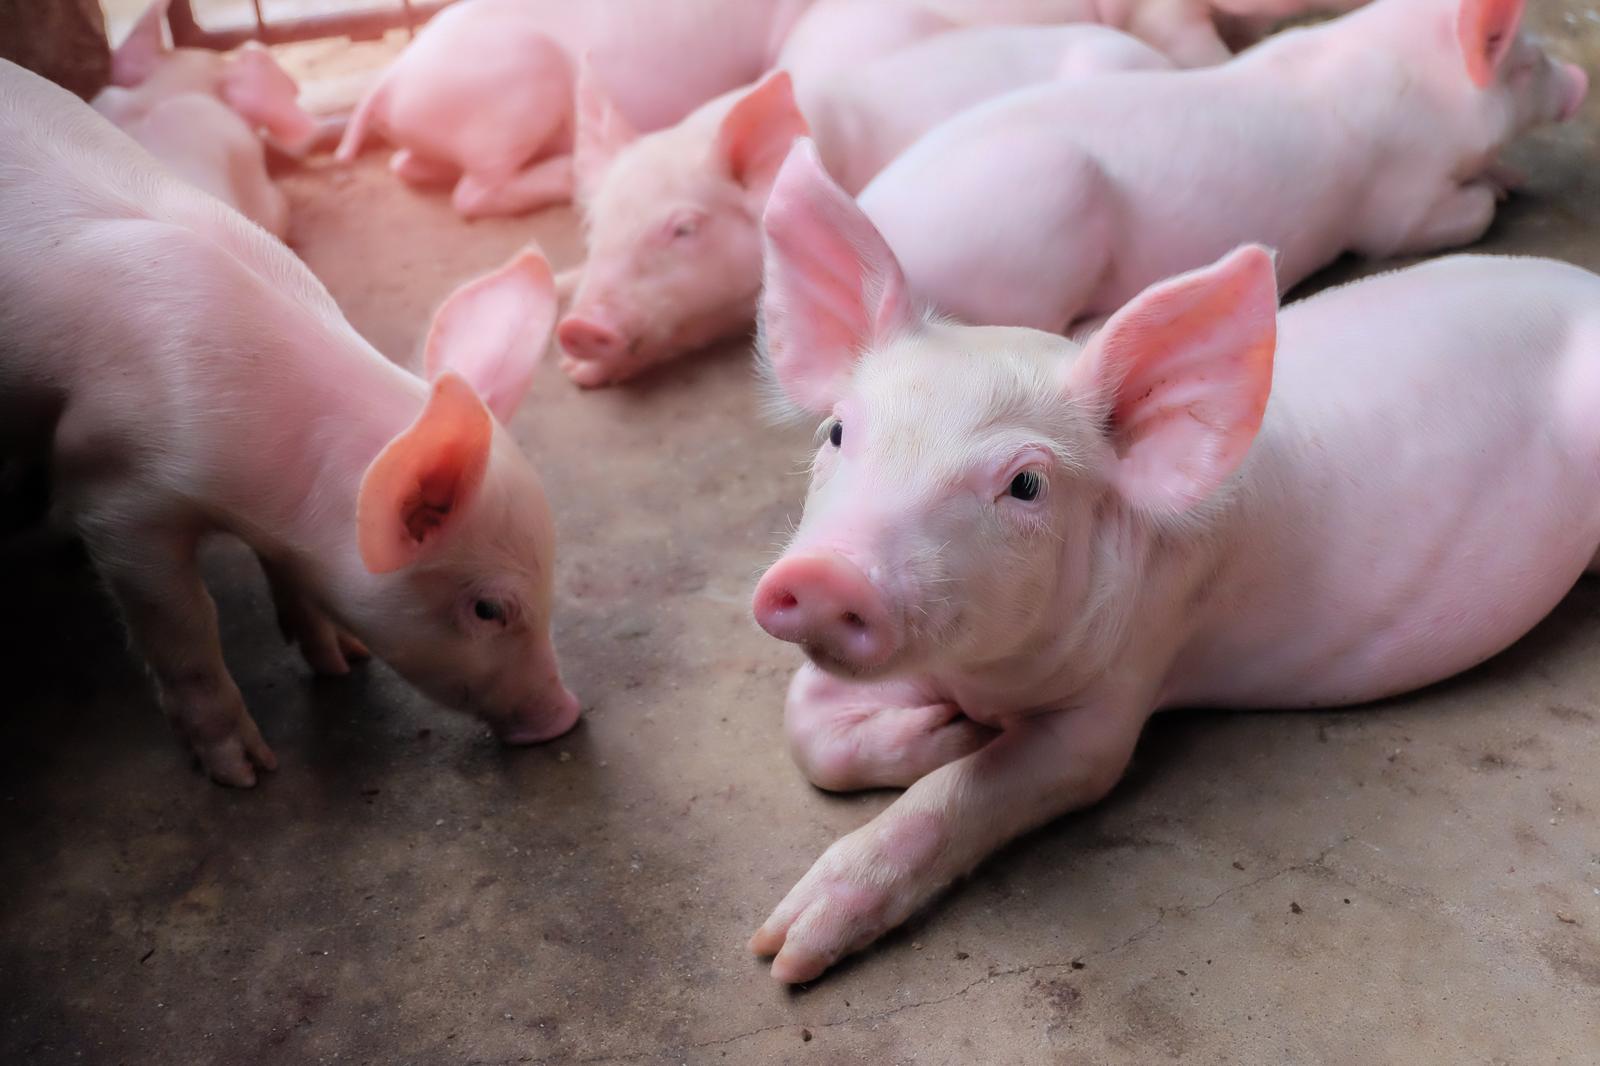 JAMPO SEAKASVATUSE OÜ - poultry production, farm animals, Pig farming